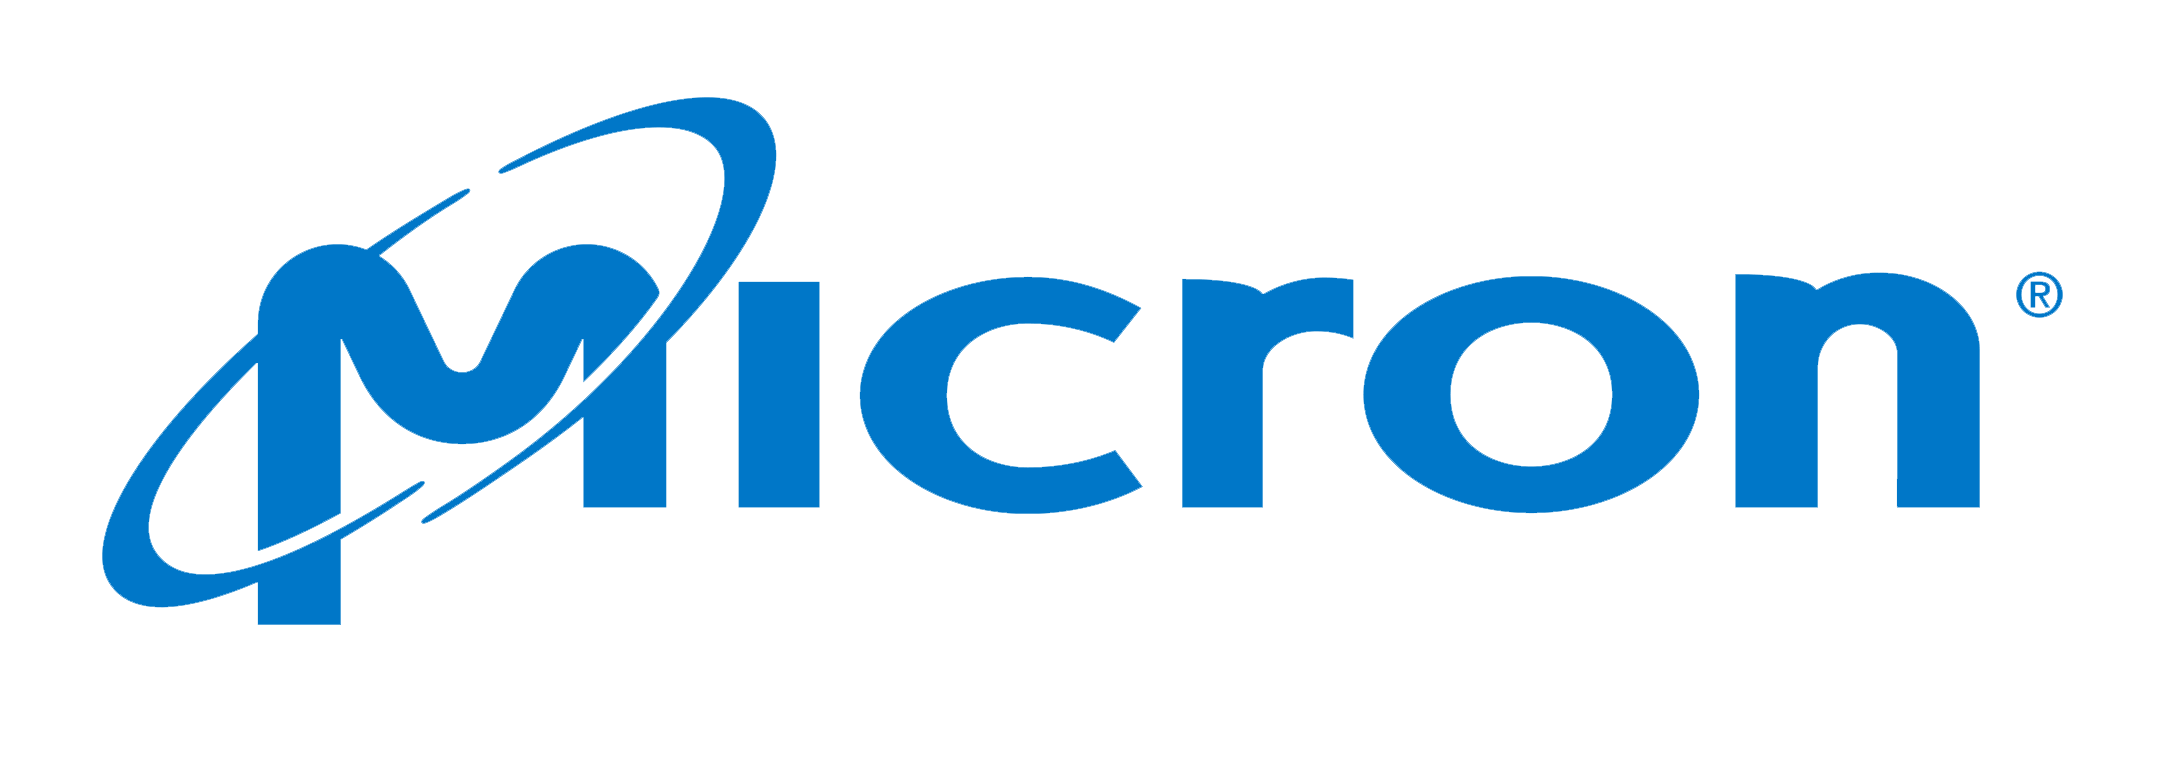 micron logo transparent background